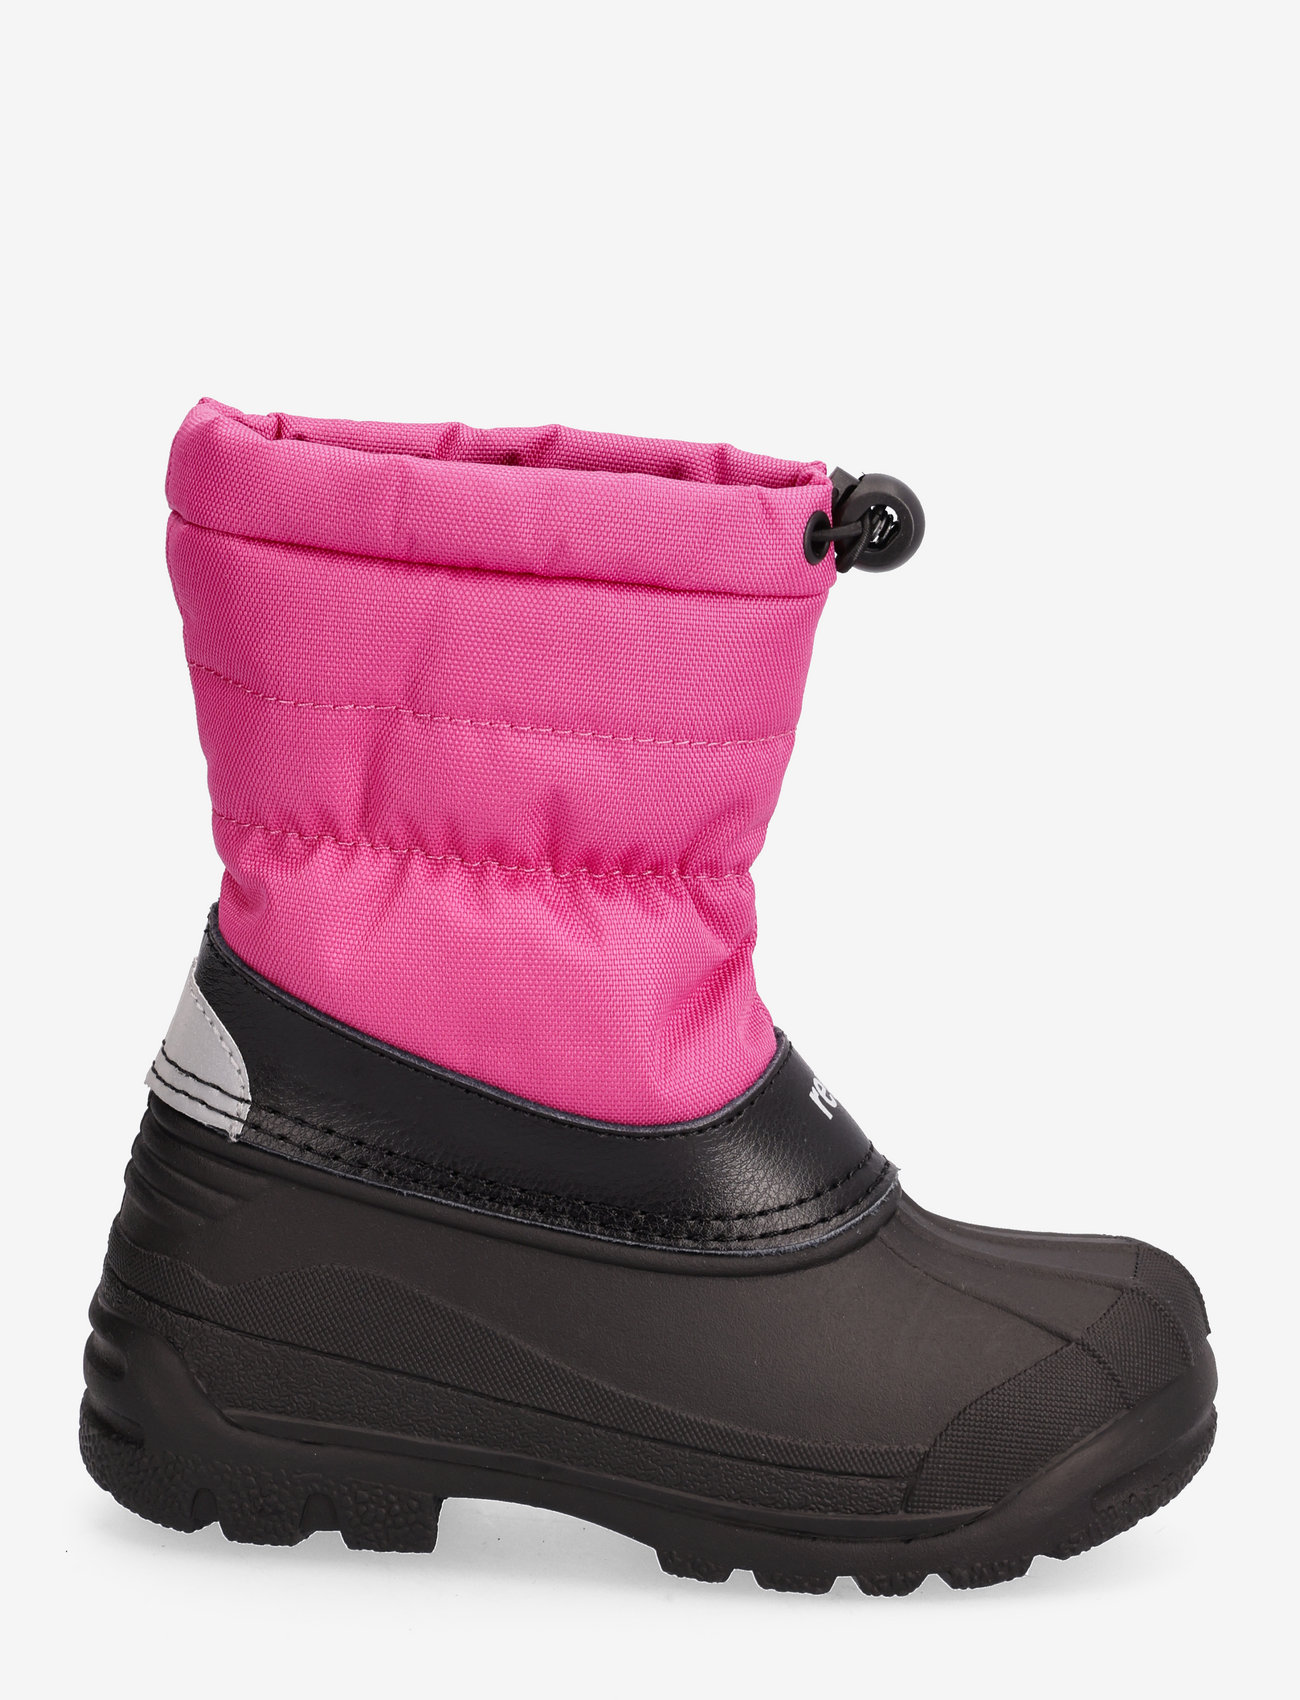 Reima - Winter boots, Nefar - vaikams - magenta purple - 1